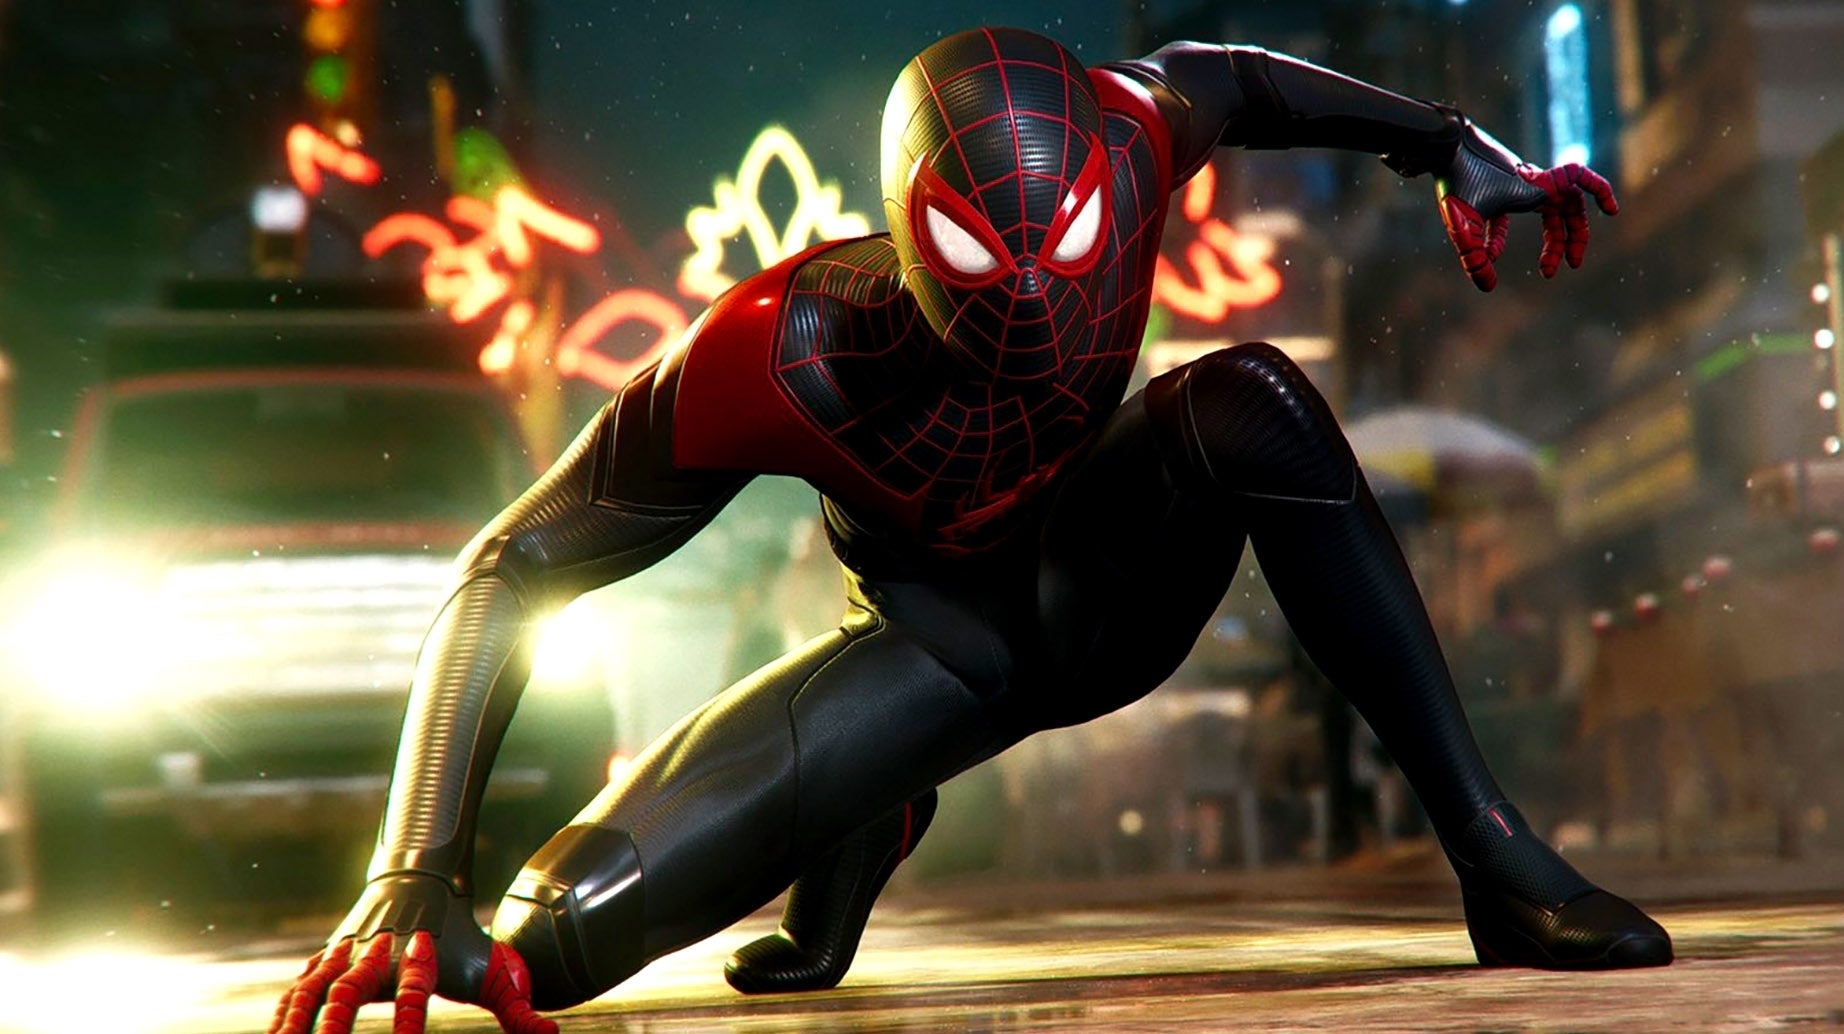 Afbeeldingen van Marvel's Spider-Man: Miles Morales review - New York op z'n mooist